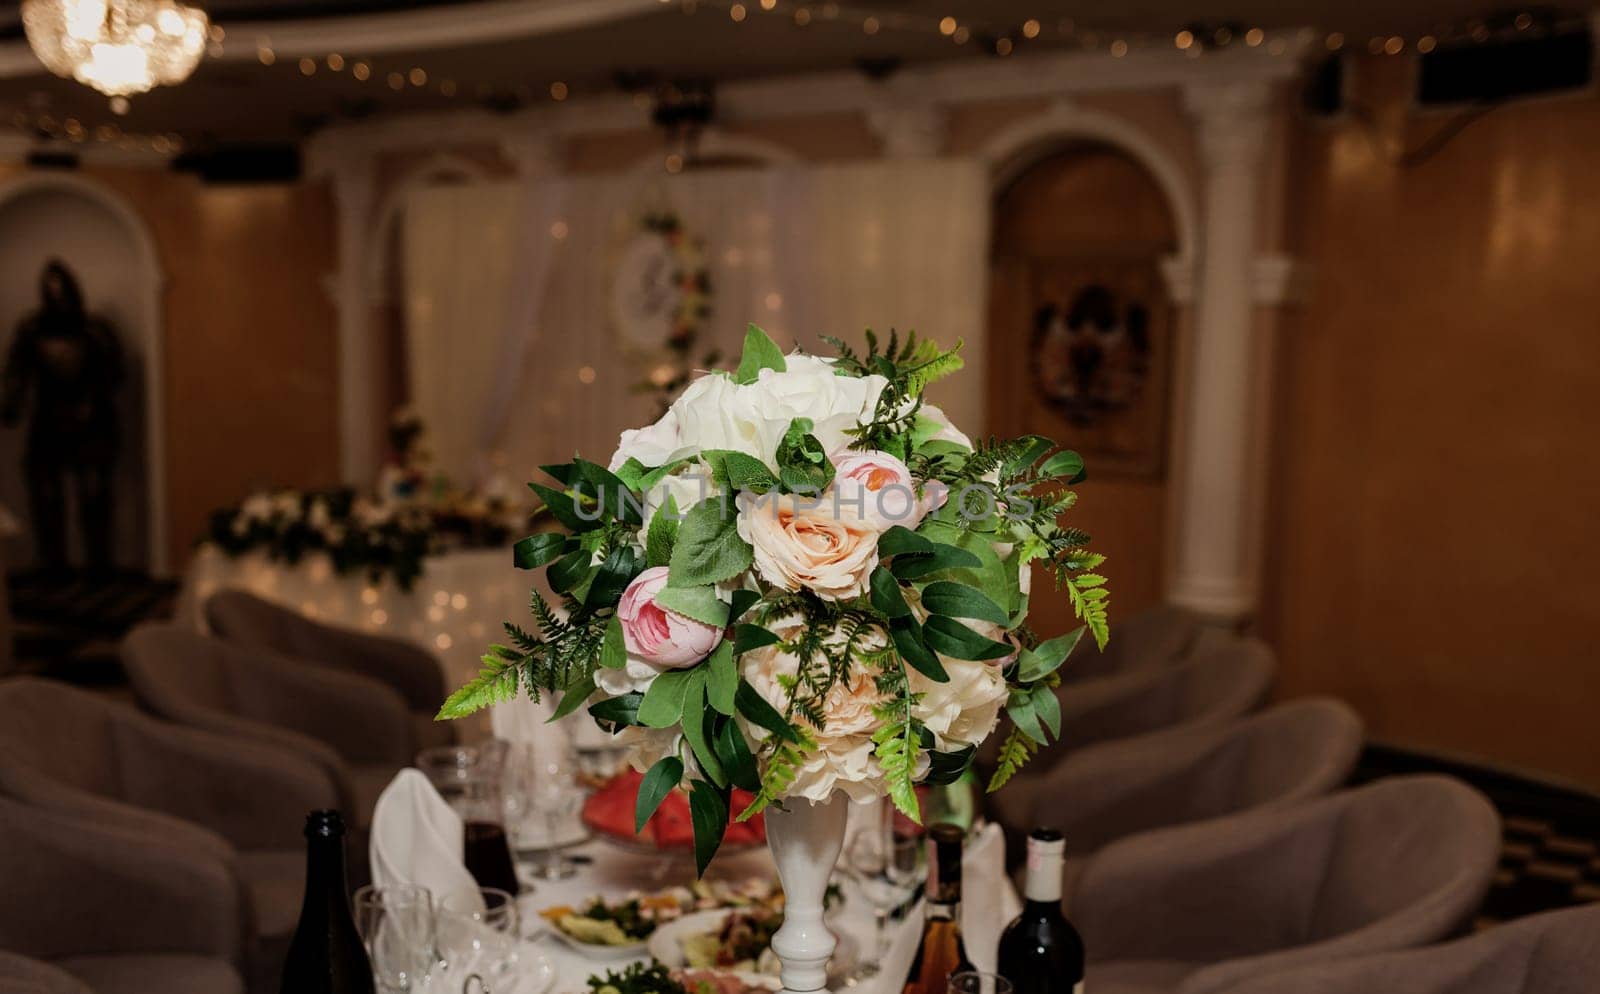 table set for dinner with flower composition in restaurant, luxury interior background. Wedding elegant banquet decoration